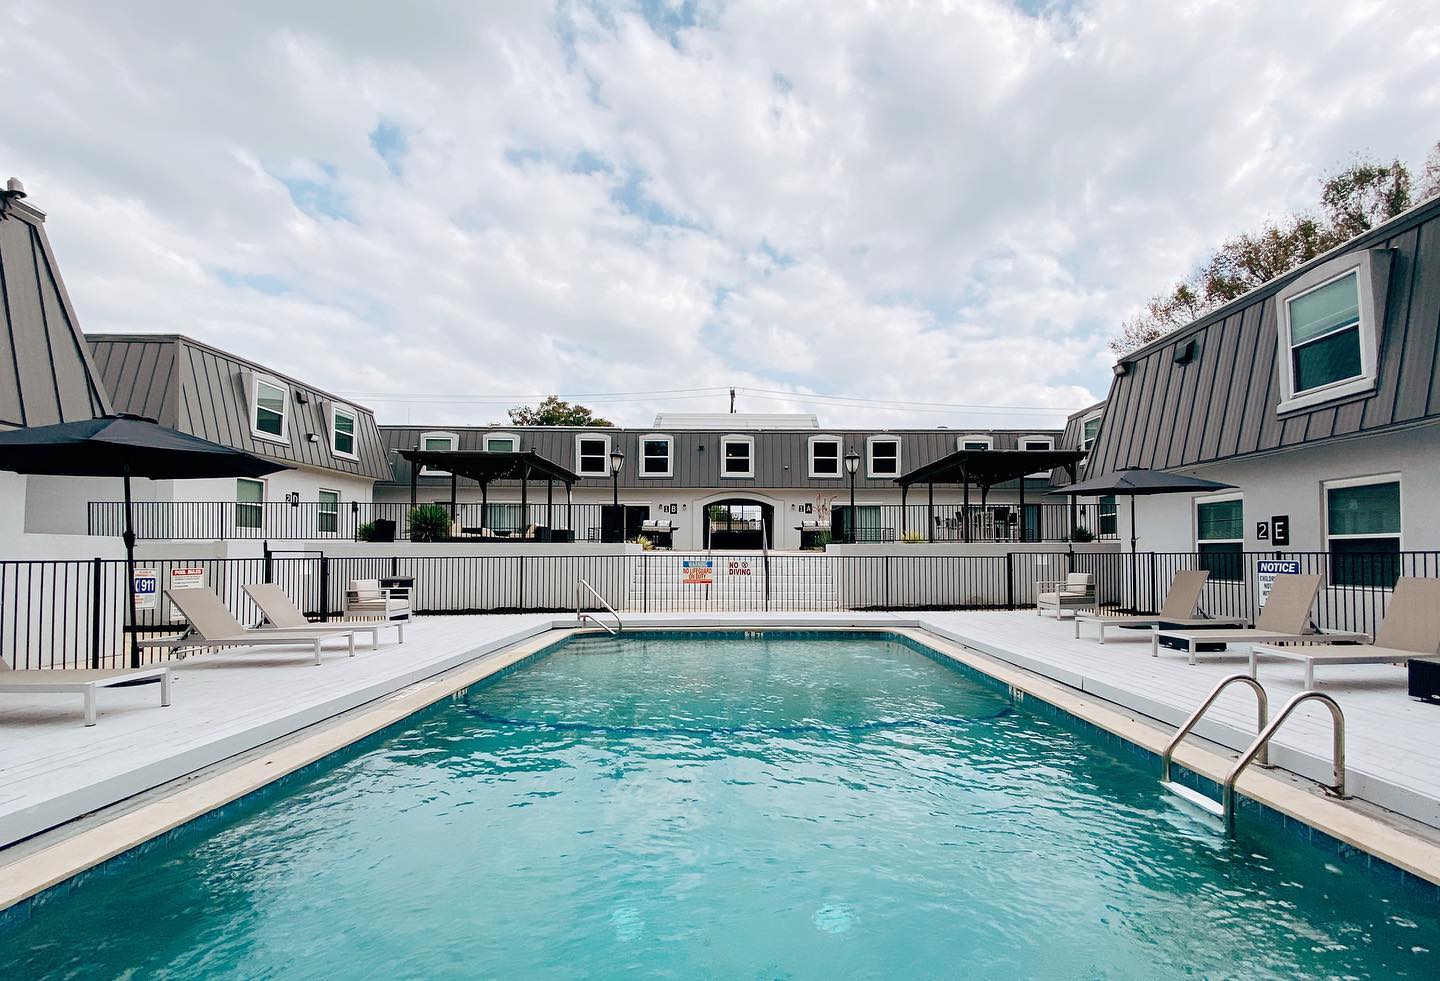 Apartment building with swimming pool in Mueller neighborhood in Austin, TX. Photo by Instagram user @mueller_crossing